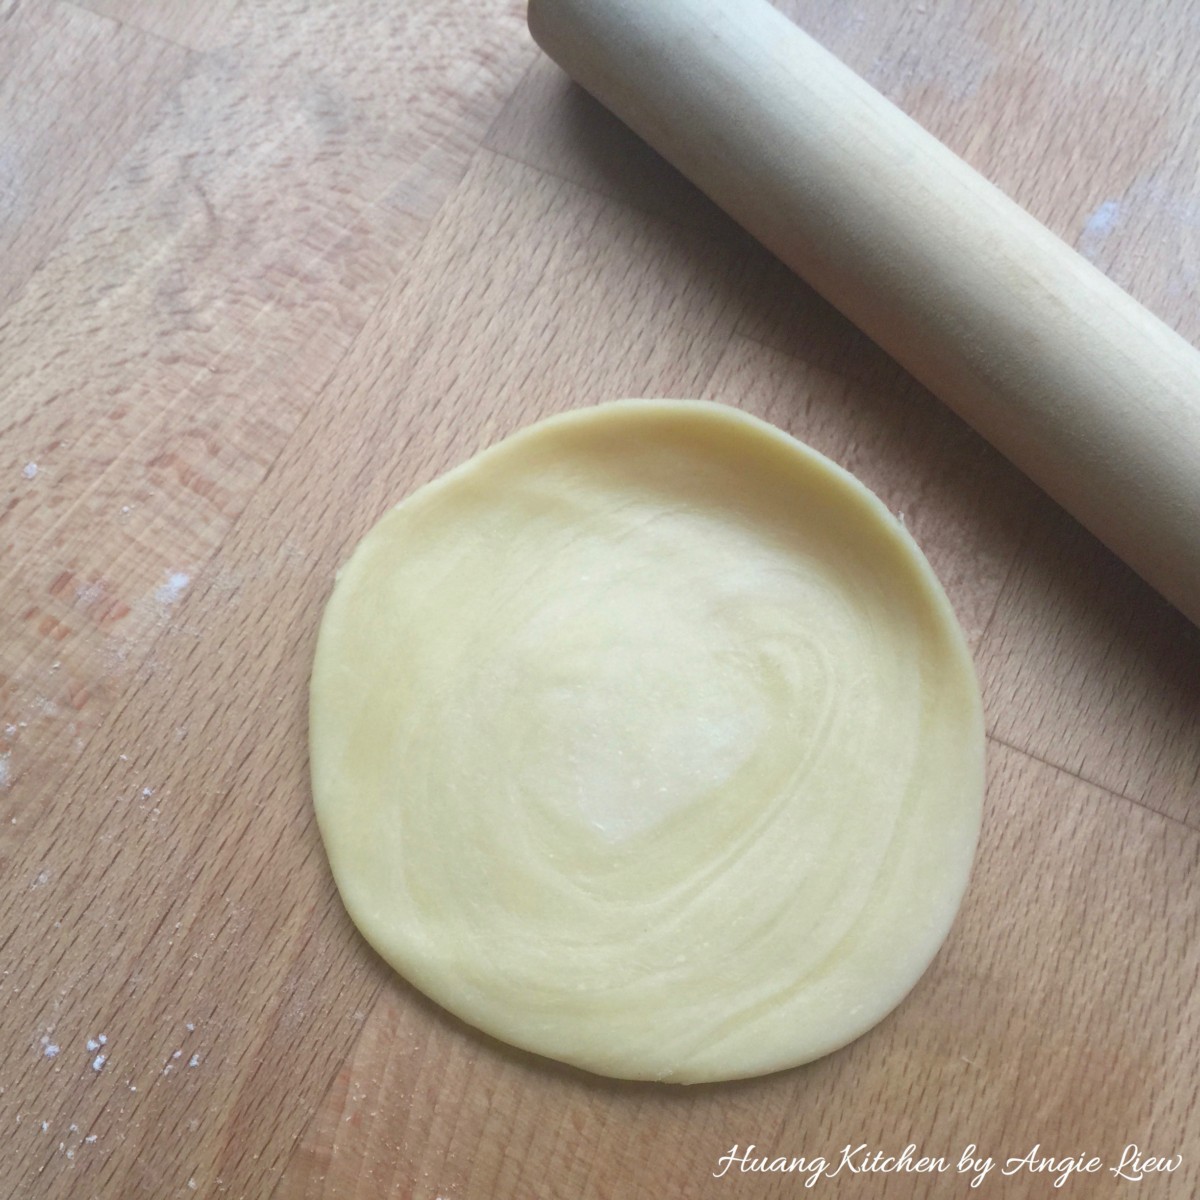 Spiral Curry Puffs recipe - flatten into round shape